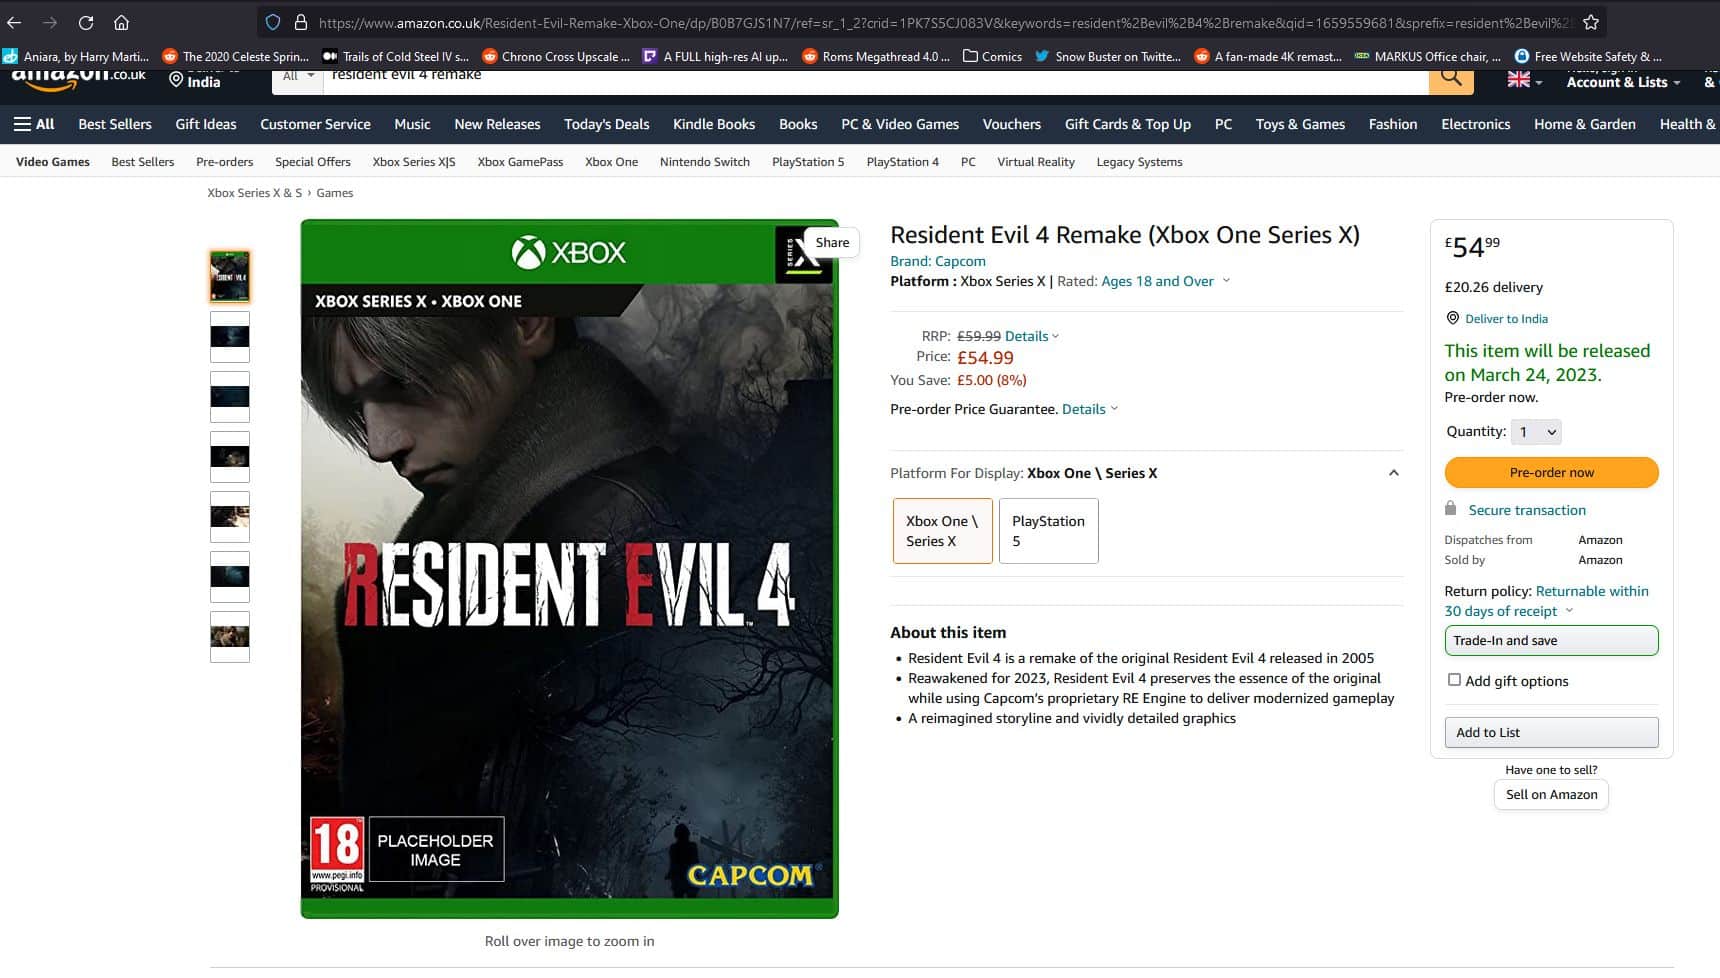 Resident Evil 4 Remake para Xbox One es descubierto en Amazon UK